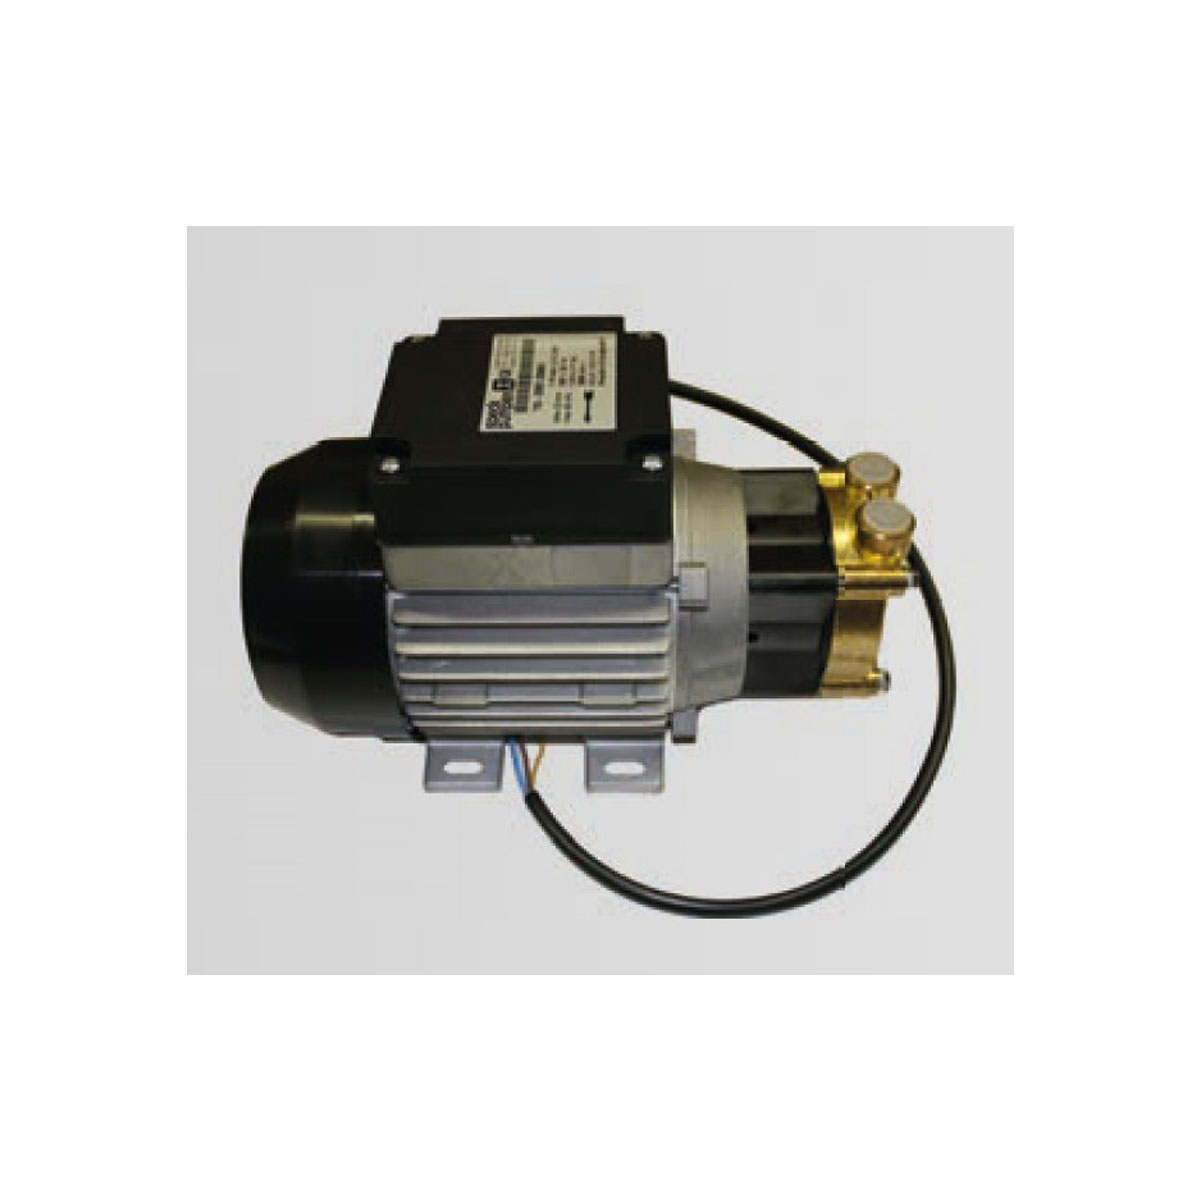 Speck water pump self-priming type Y2951, 230 Volt, high box, brass head,  230V/50Hz/1,25A, L x W x H = 225 x 110 x 145 mm.